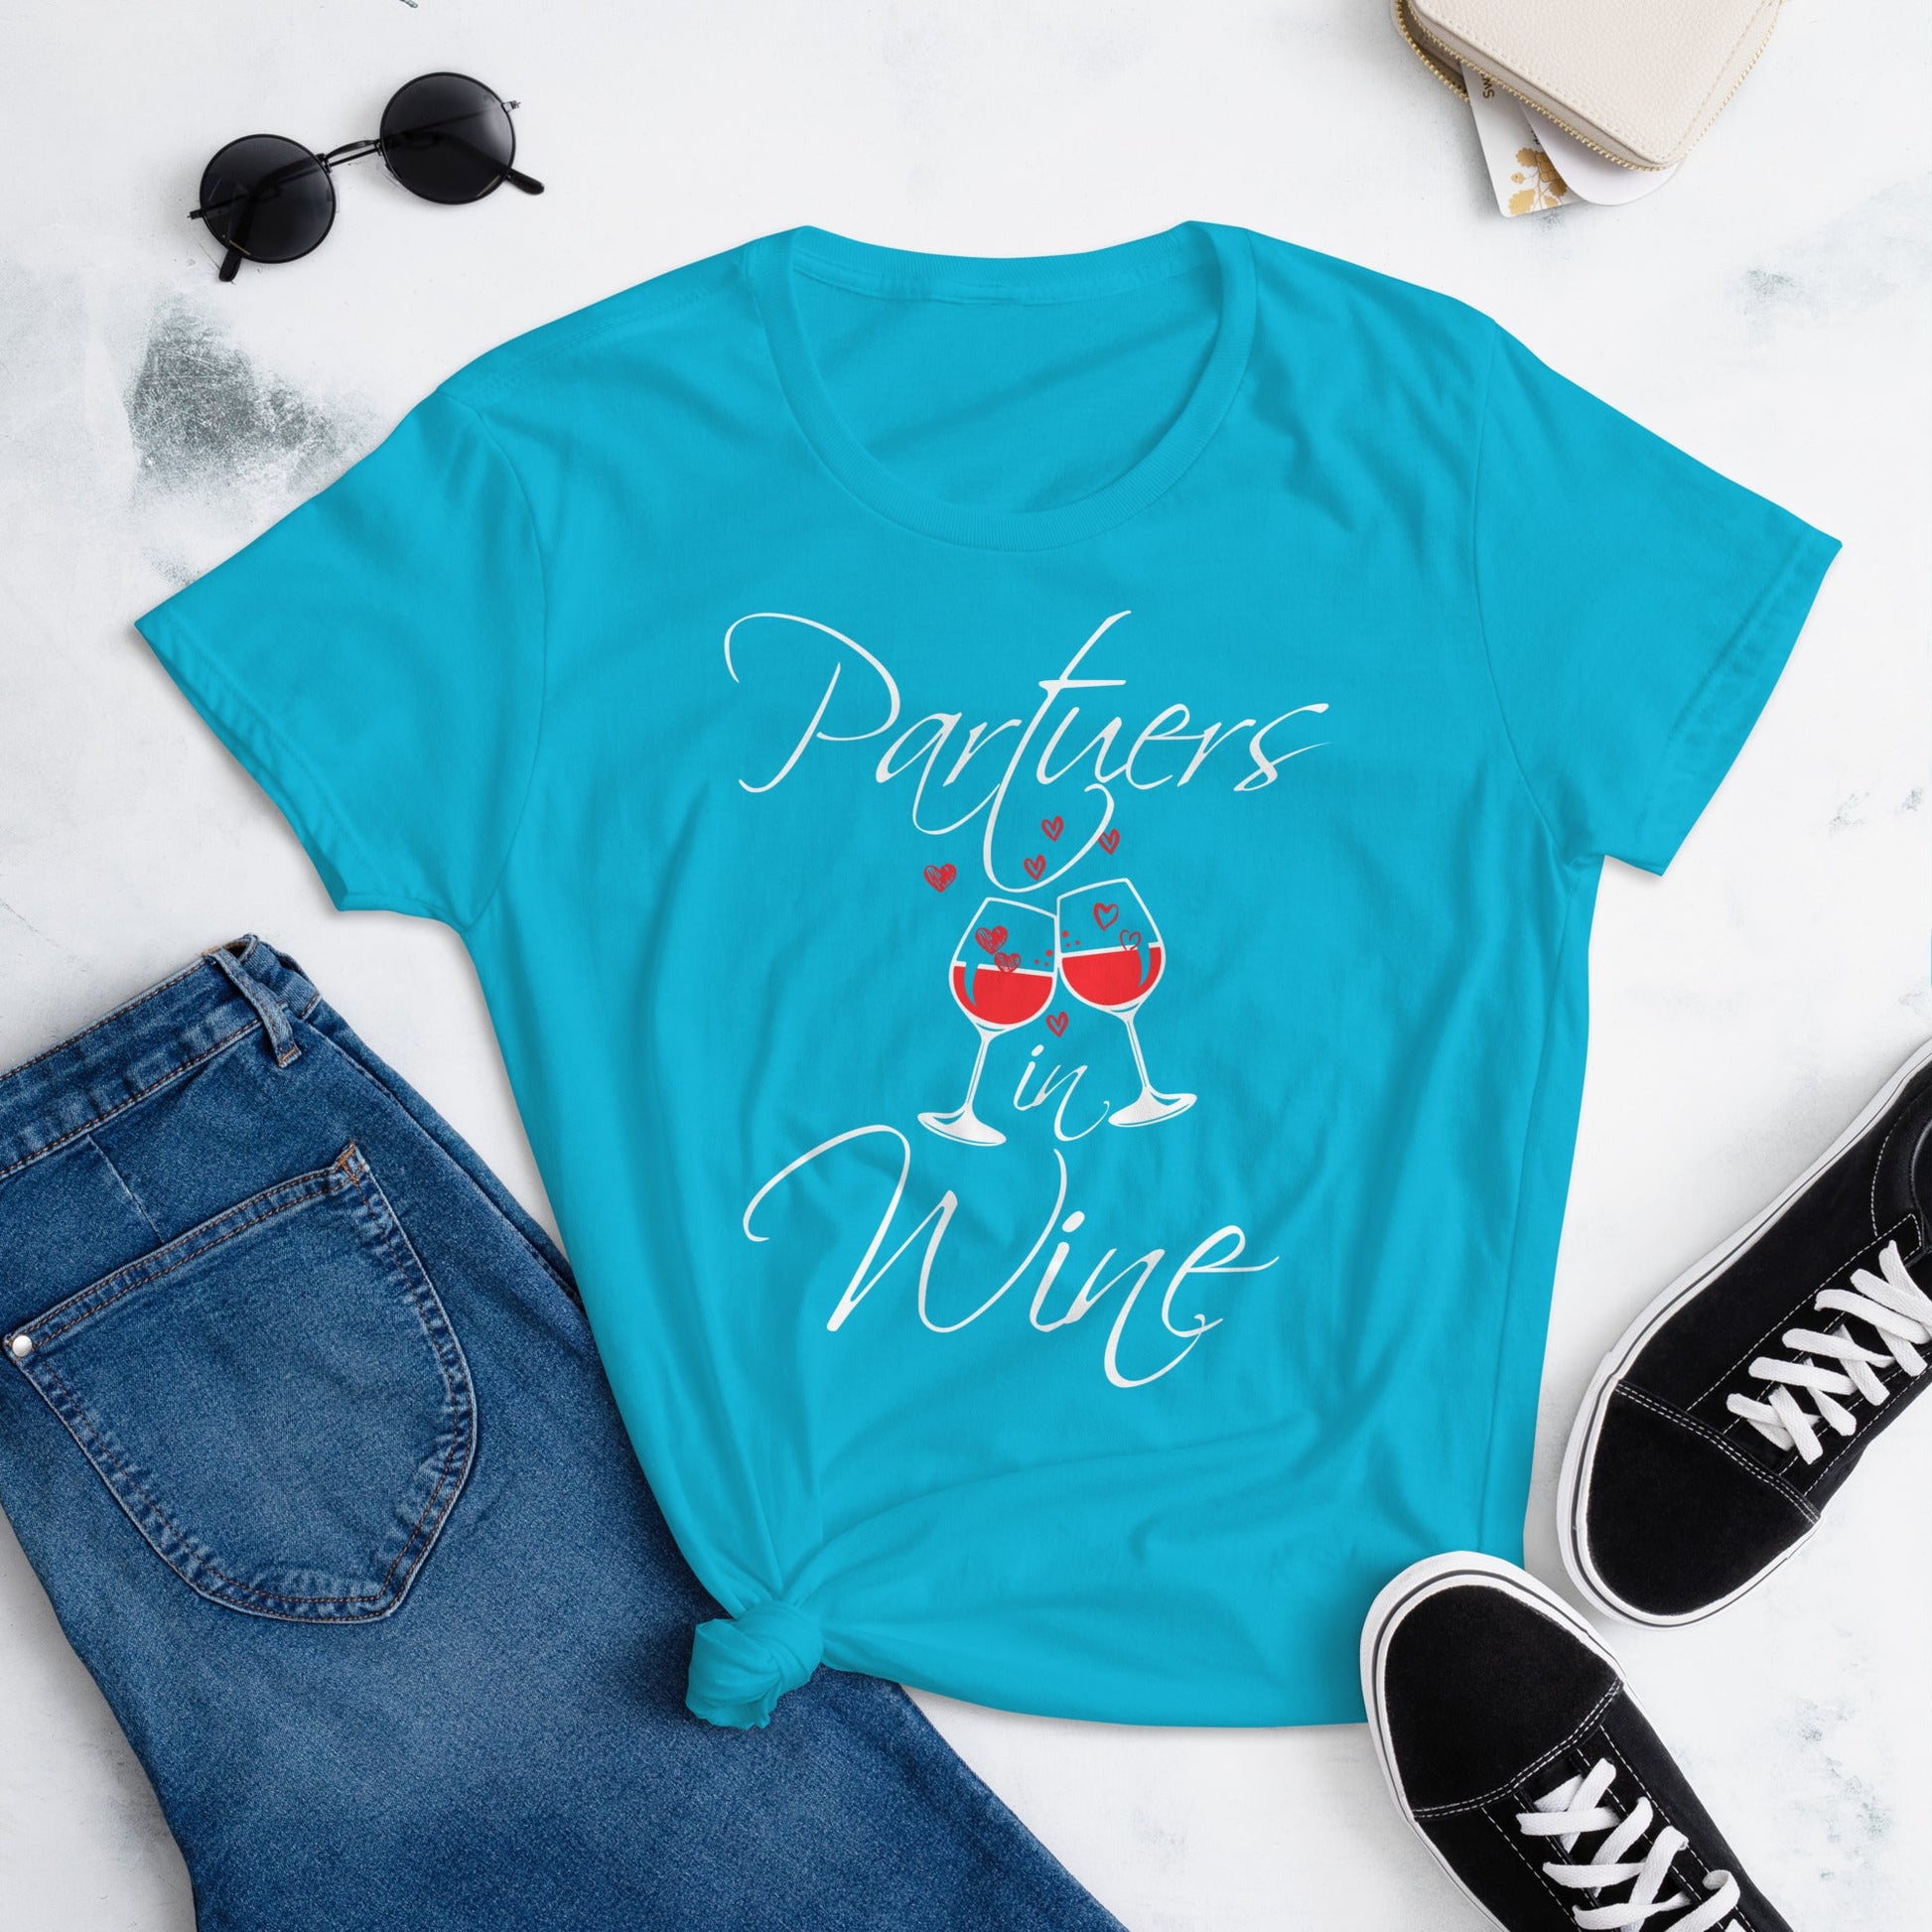 Women's 'Partners in Wine' Tee - Sustainable & Stylish Cotton Shirt